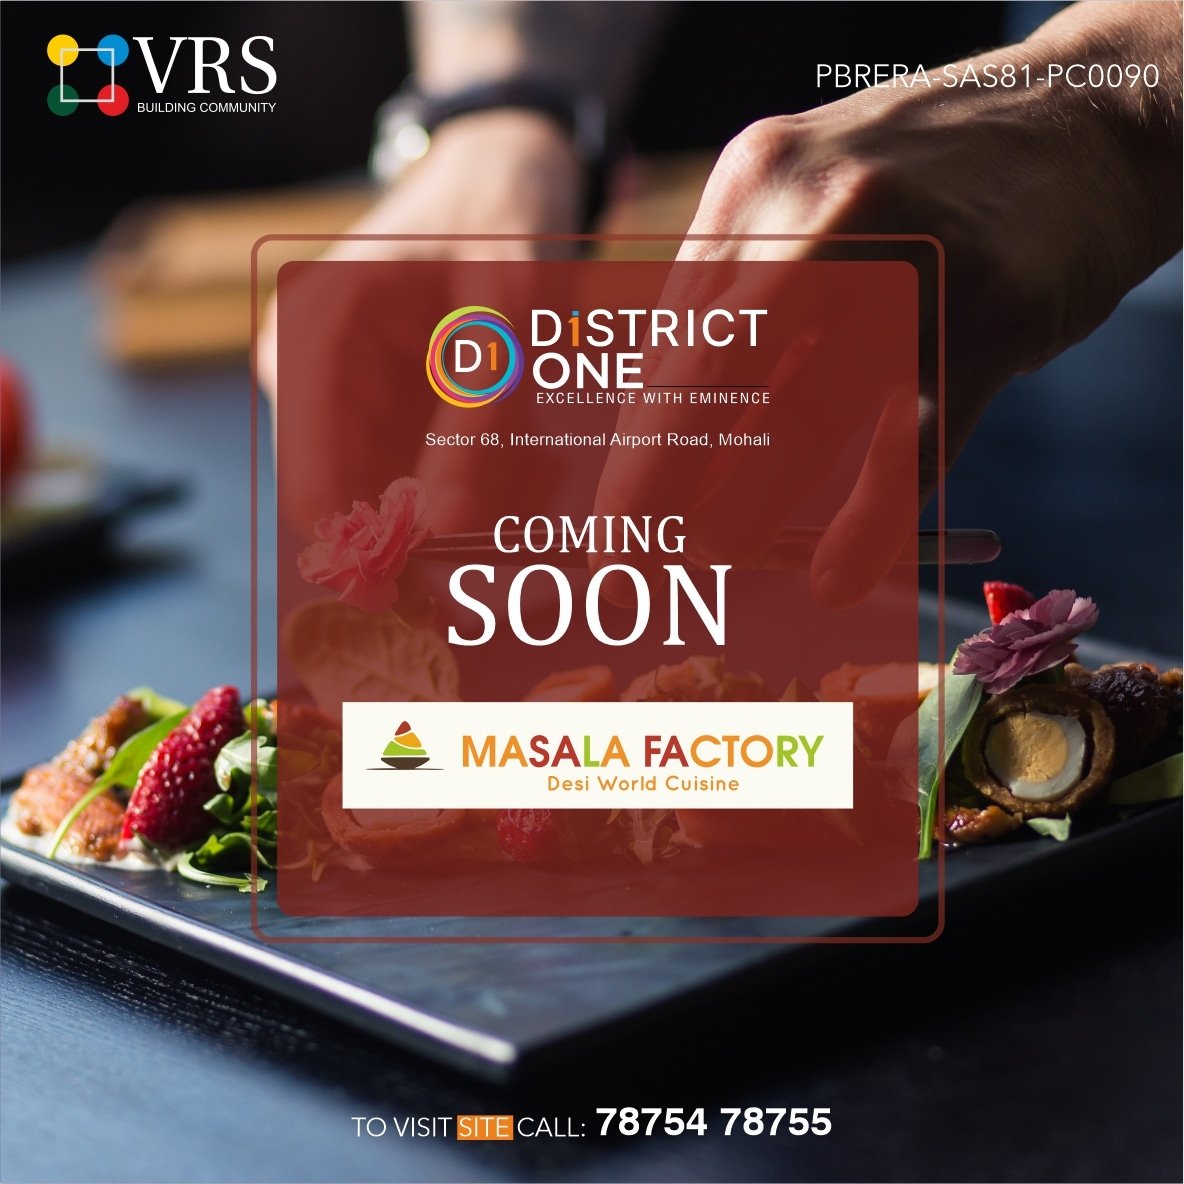 Coming soon, 𝐓𝐡𝐞 𝐌𝐚𝐬𝐚𝐥𝐚 𝐅𝐚𝐜𝐭𝐨𝐫𝐲, your next favourite desi world cuisine destination at District One.

#DistrictOne #ComingSoon #VRS #VRSGroup #Masalafactory #Desiworld #Cuisines